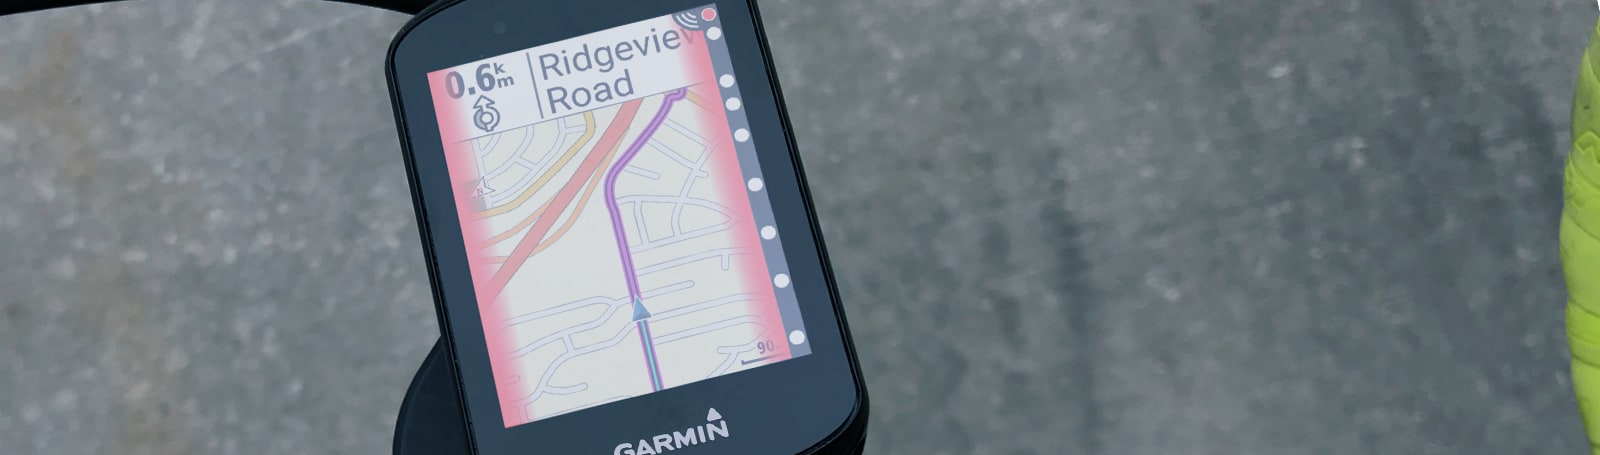 Garmin-GPS-Cycle-Computer-Edge-530-Advanced-Bike-GPS-Device-Only-22